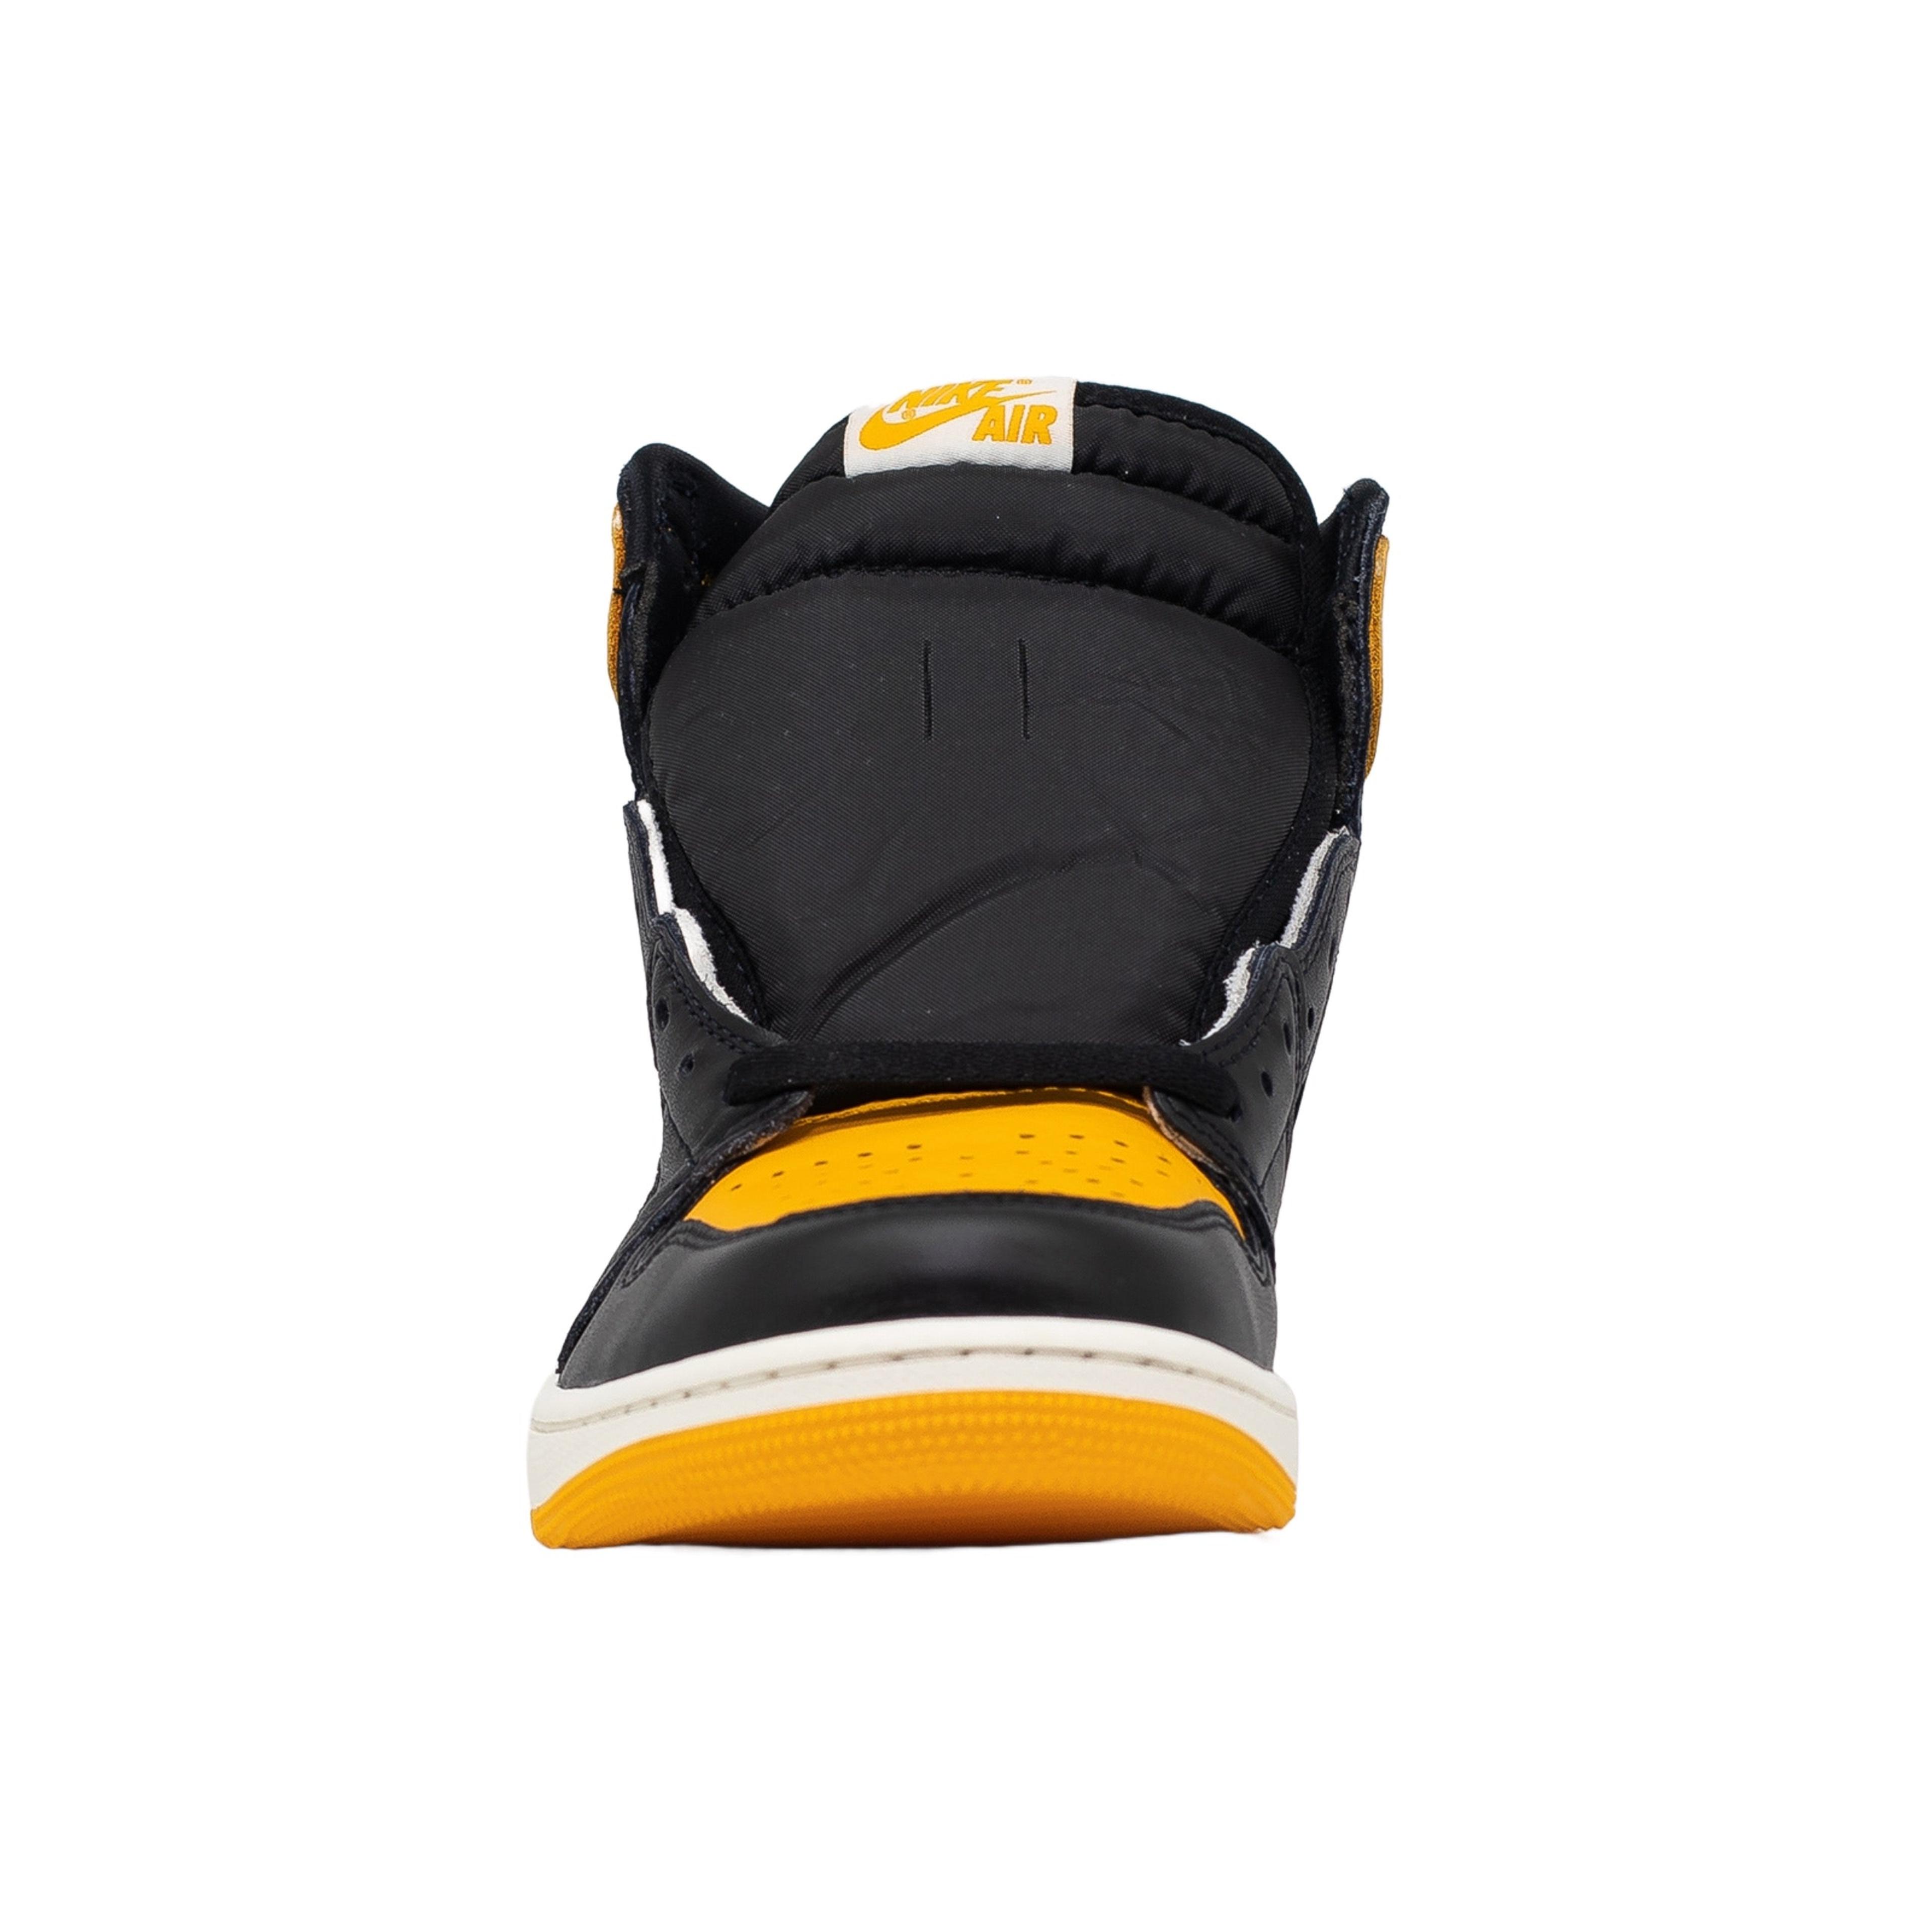 Alternate View 3 of Air Jordan 1 High (GS), Yellow Toe